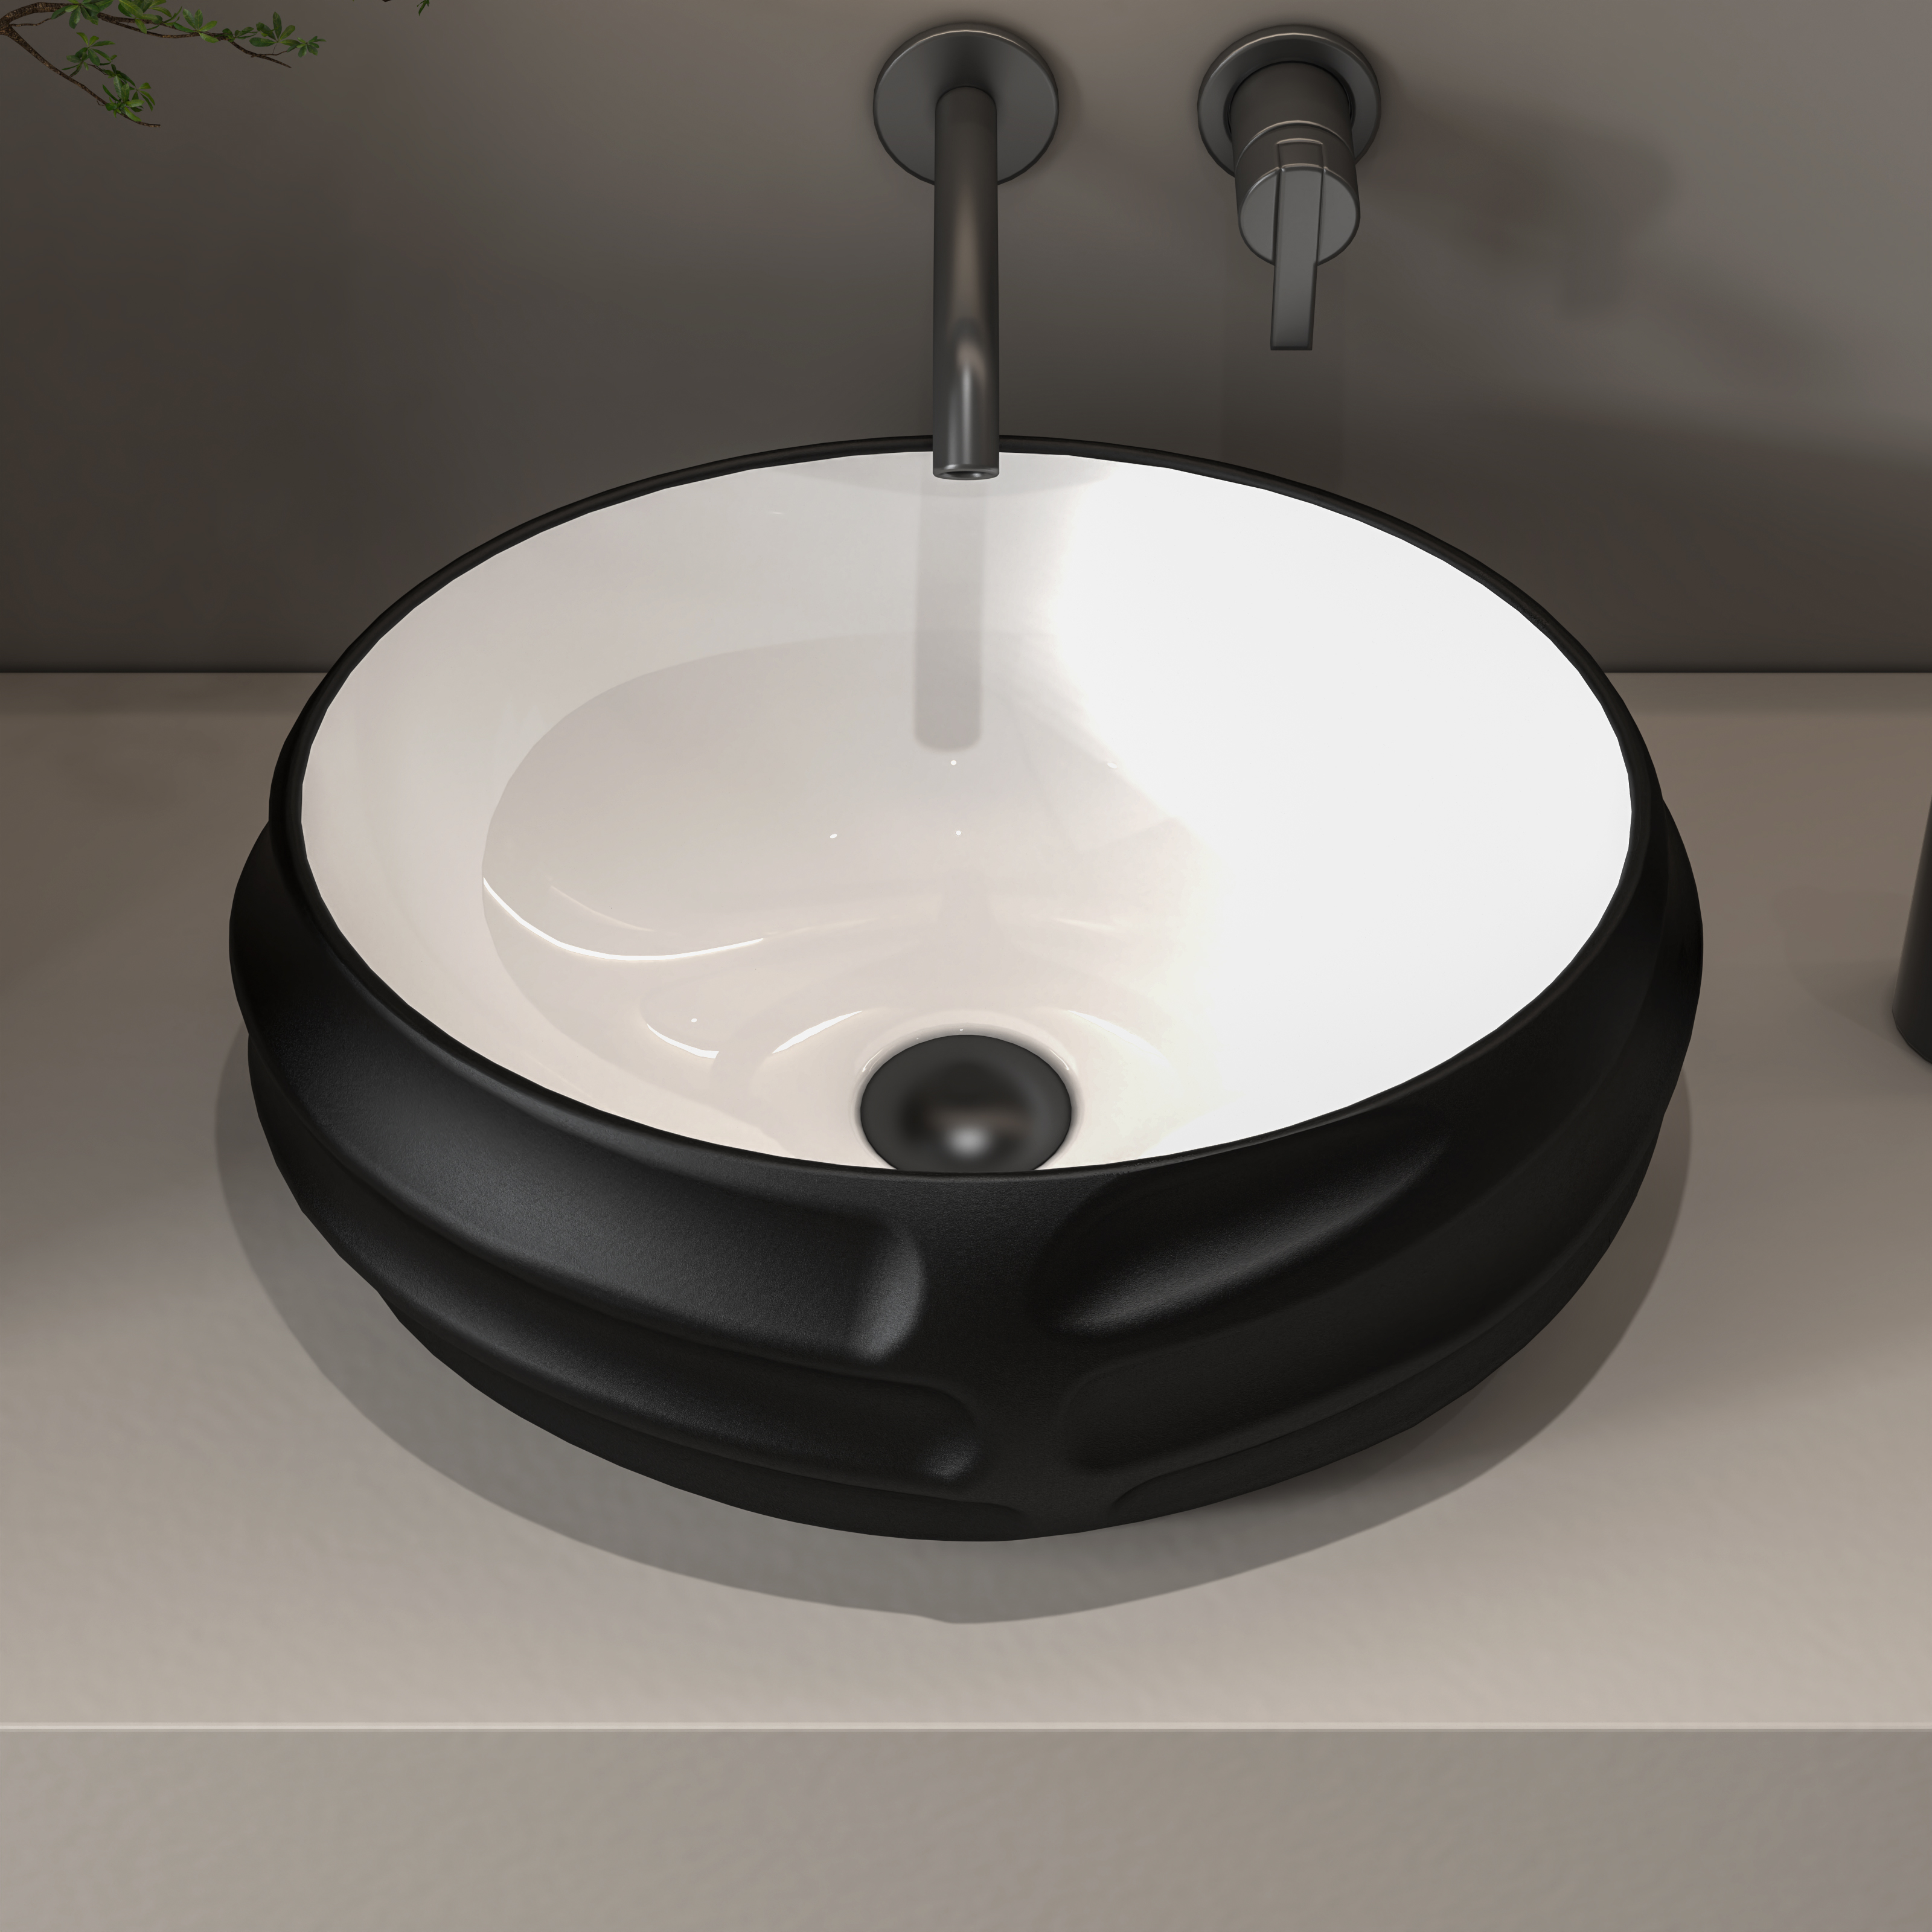 MEJE 18 Inch Oval Art Basin with Embossed Pattern, Matte Black Color, Countertop Bathroom Vessel Sink, Above Counter Porcelain Ceramic Vanity Sink (Include pop up drain)